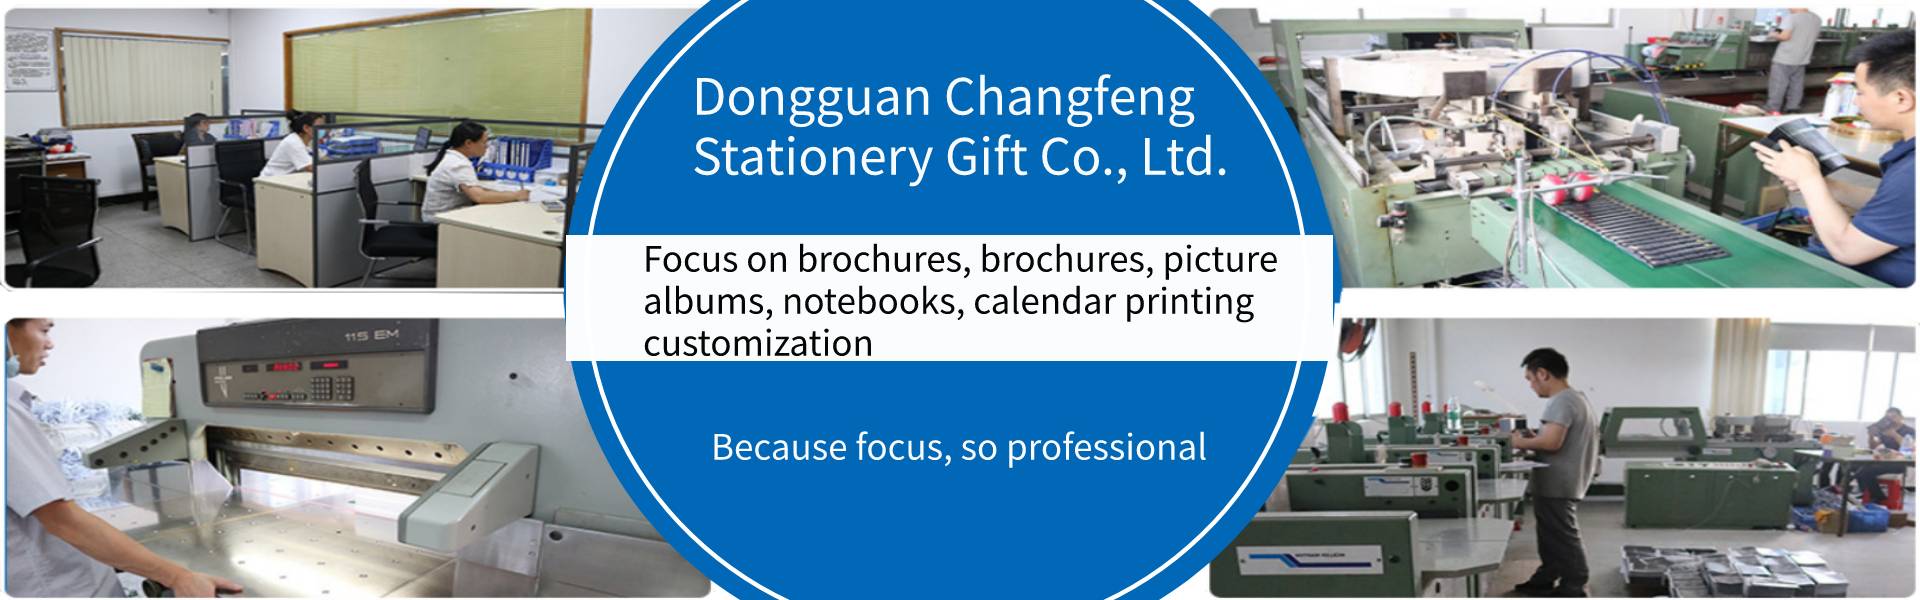 инструкция по эксплуатации, фотоальбом, блокнот,Dongguan Changfeng Stationery Gift Co., Ltd.